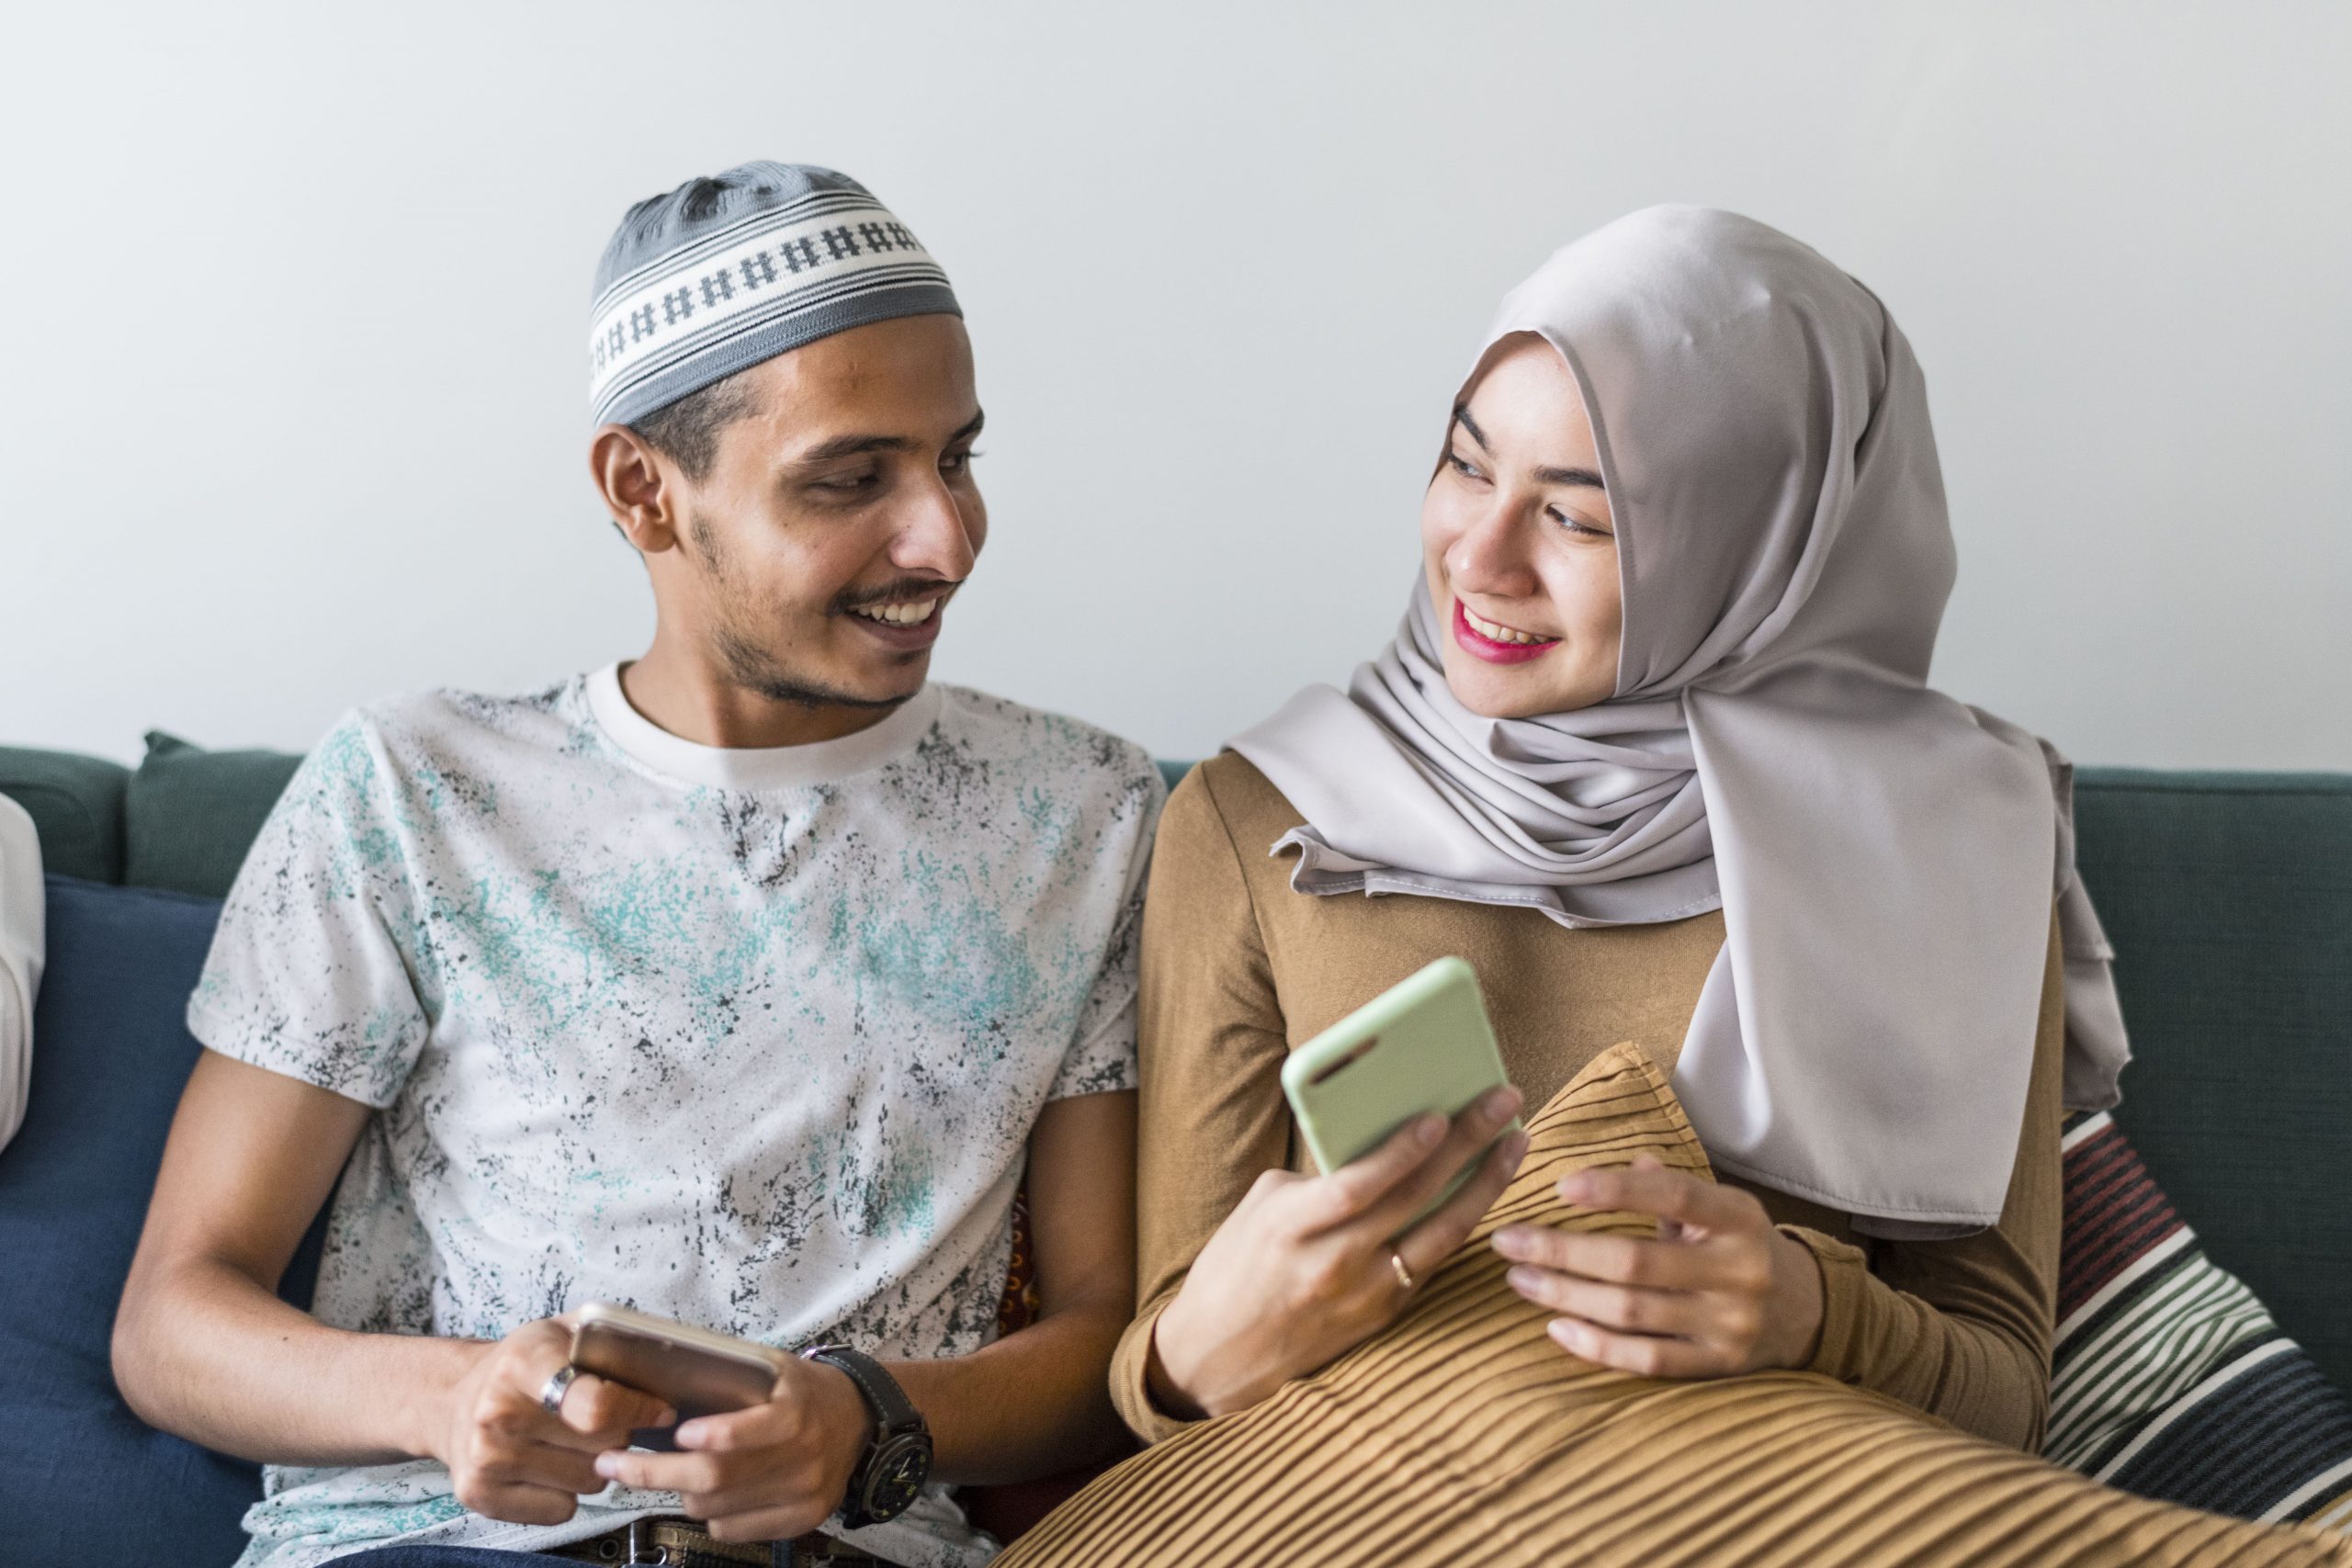 muslim-friends-using-social-media-on-phones-2021-08-27-00-05-17-utc-min